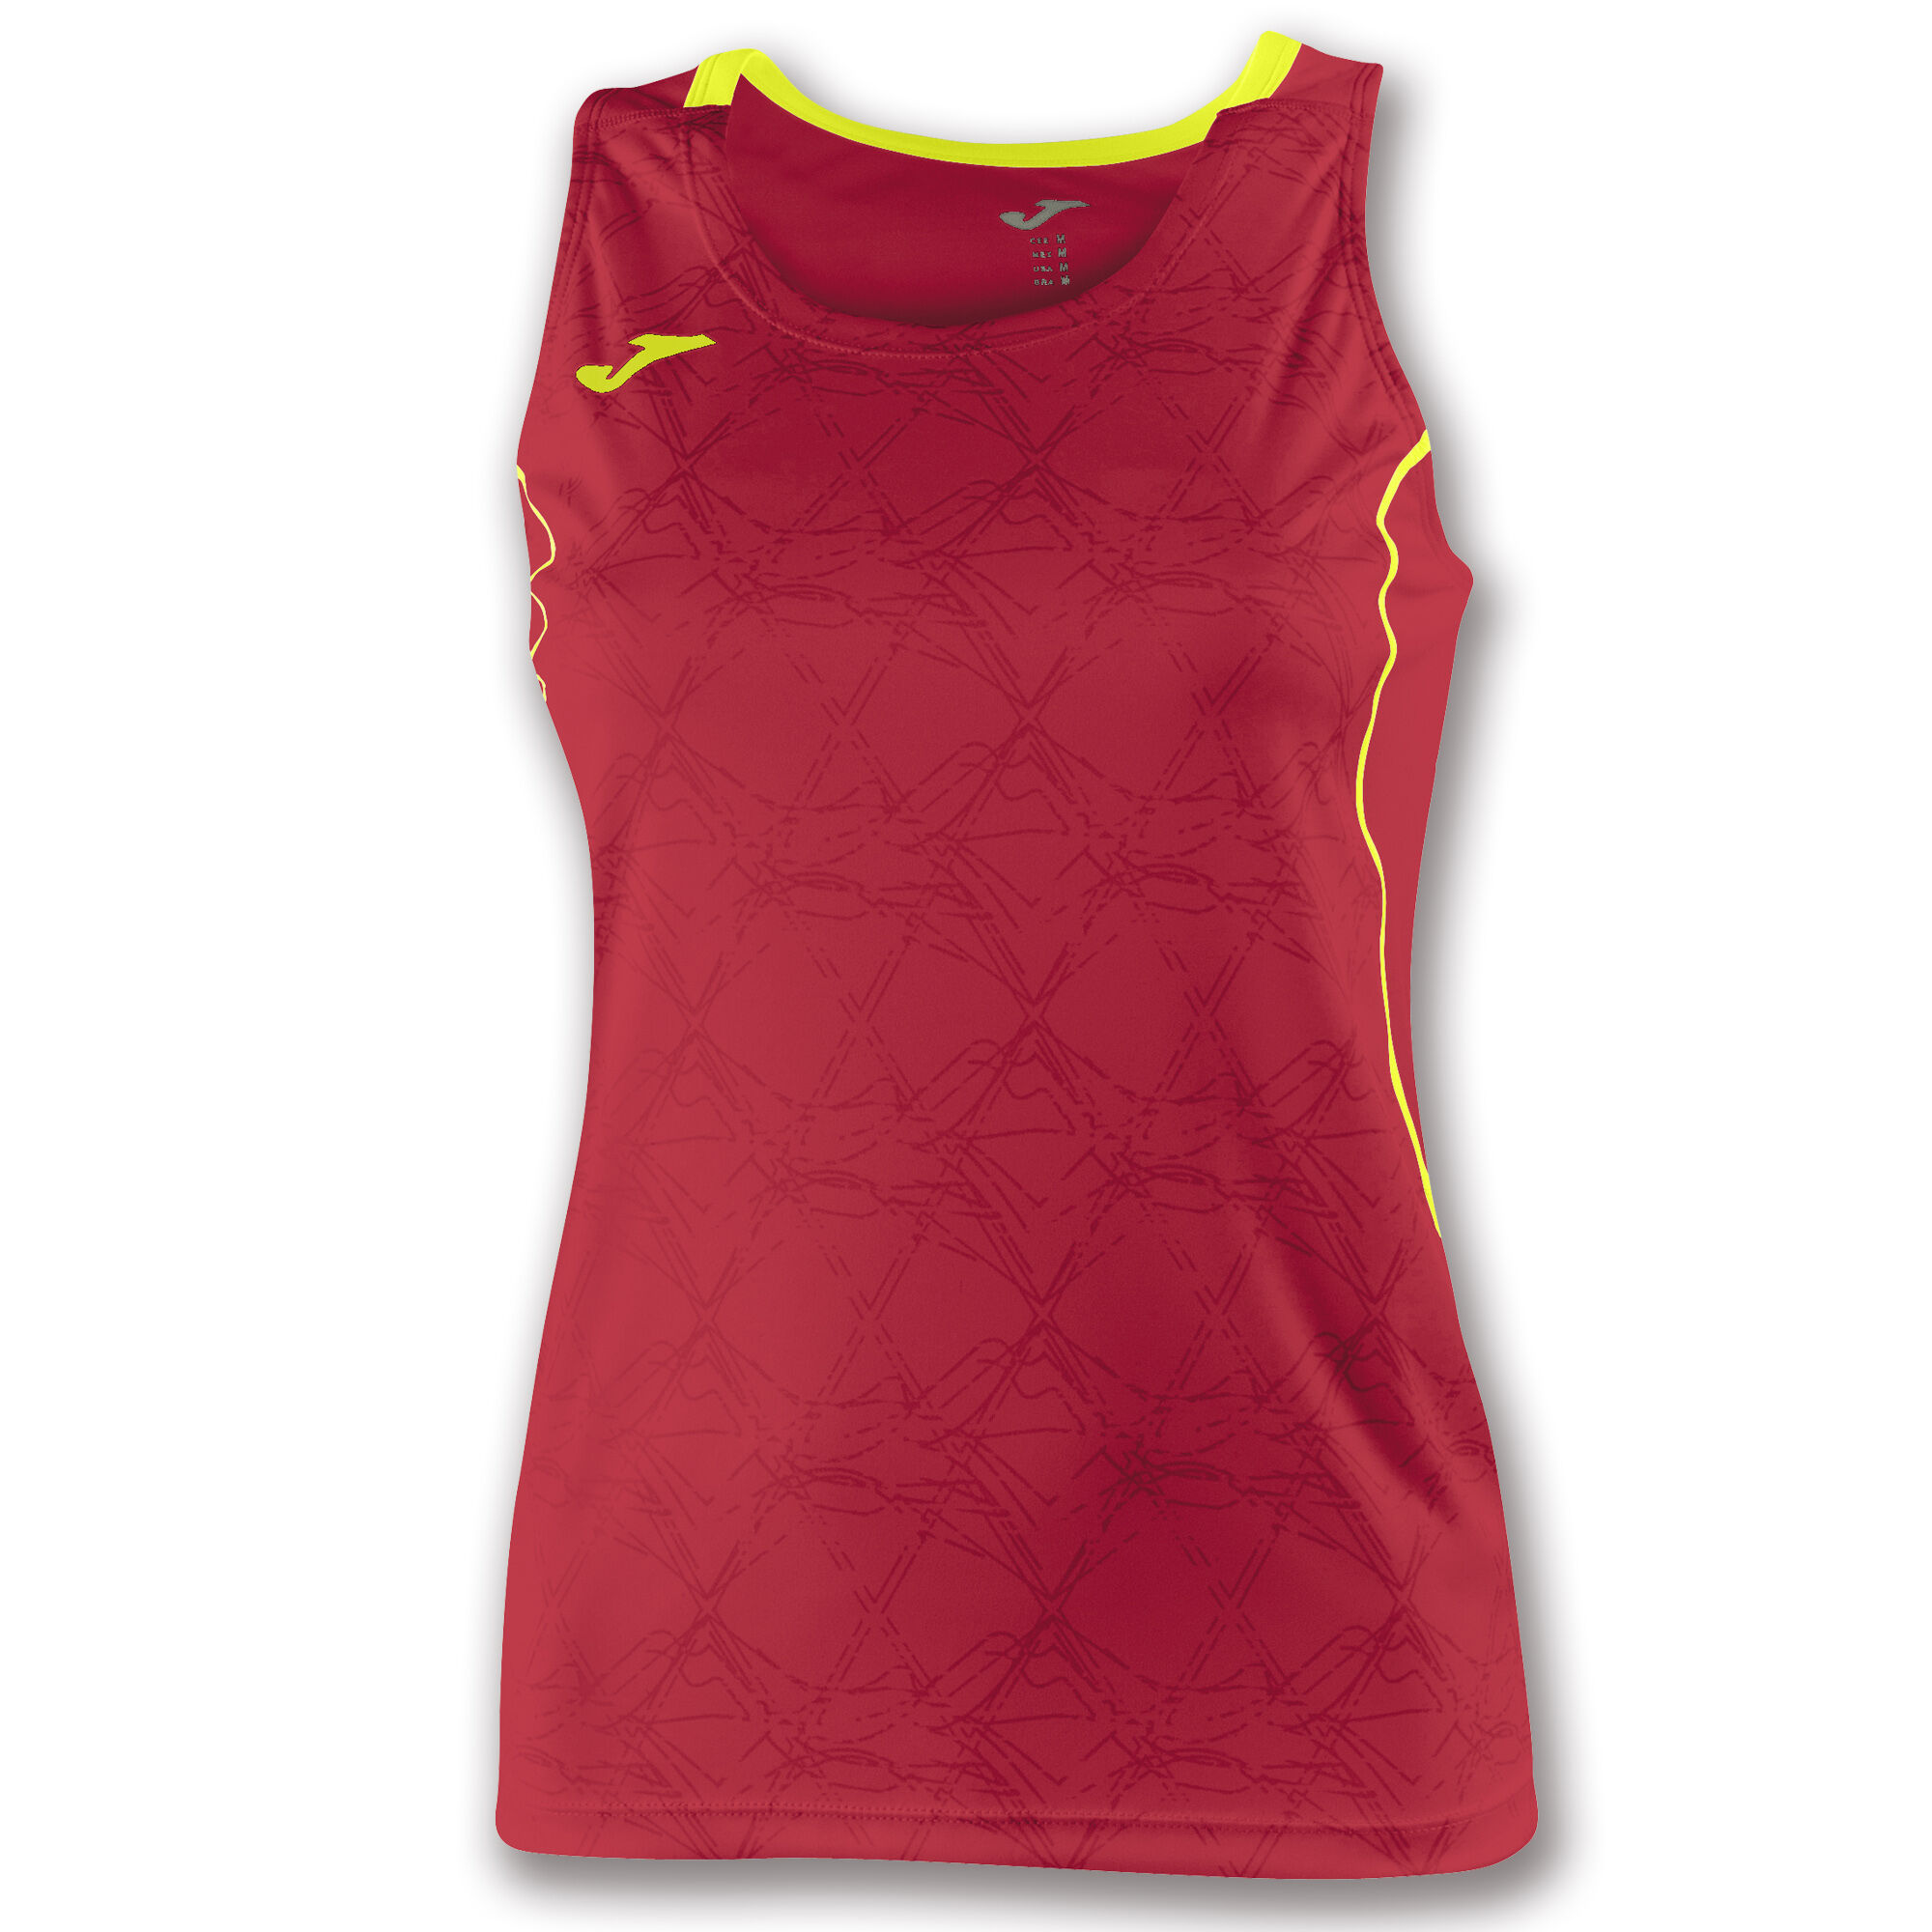 Camiseta sin mangas mujer Olimpia rojo amarillo